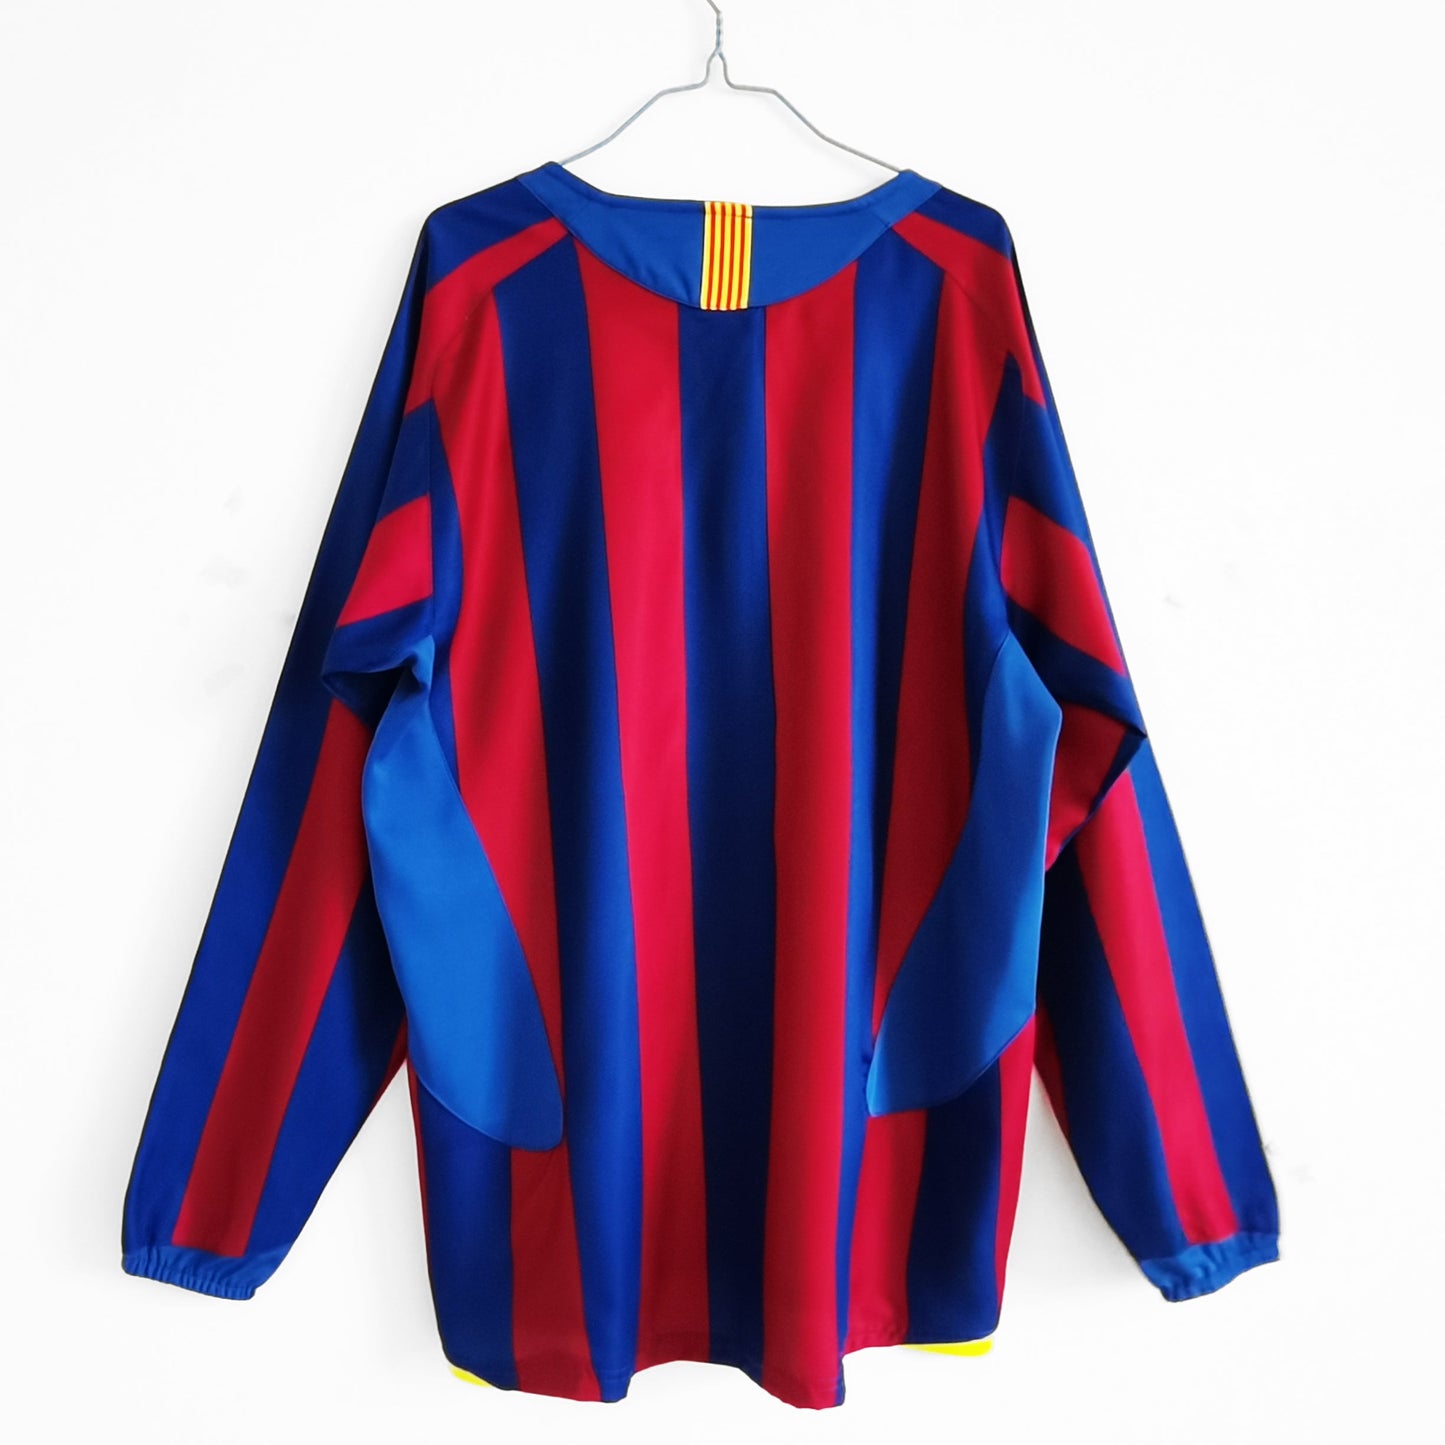 Retro: 2005-06 Barcelona Home Long Sleeve Kit